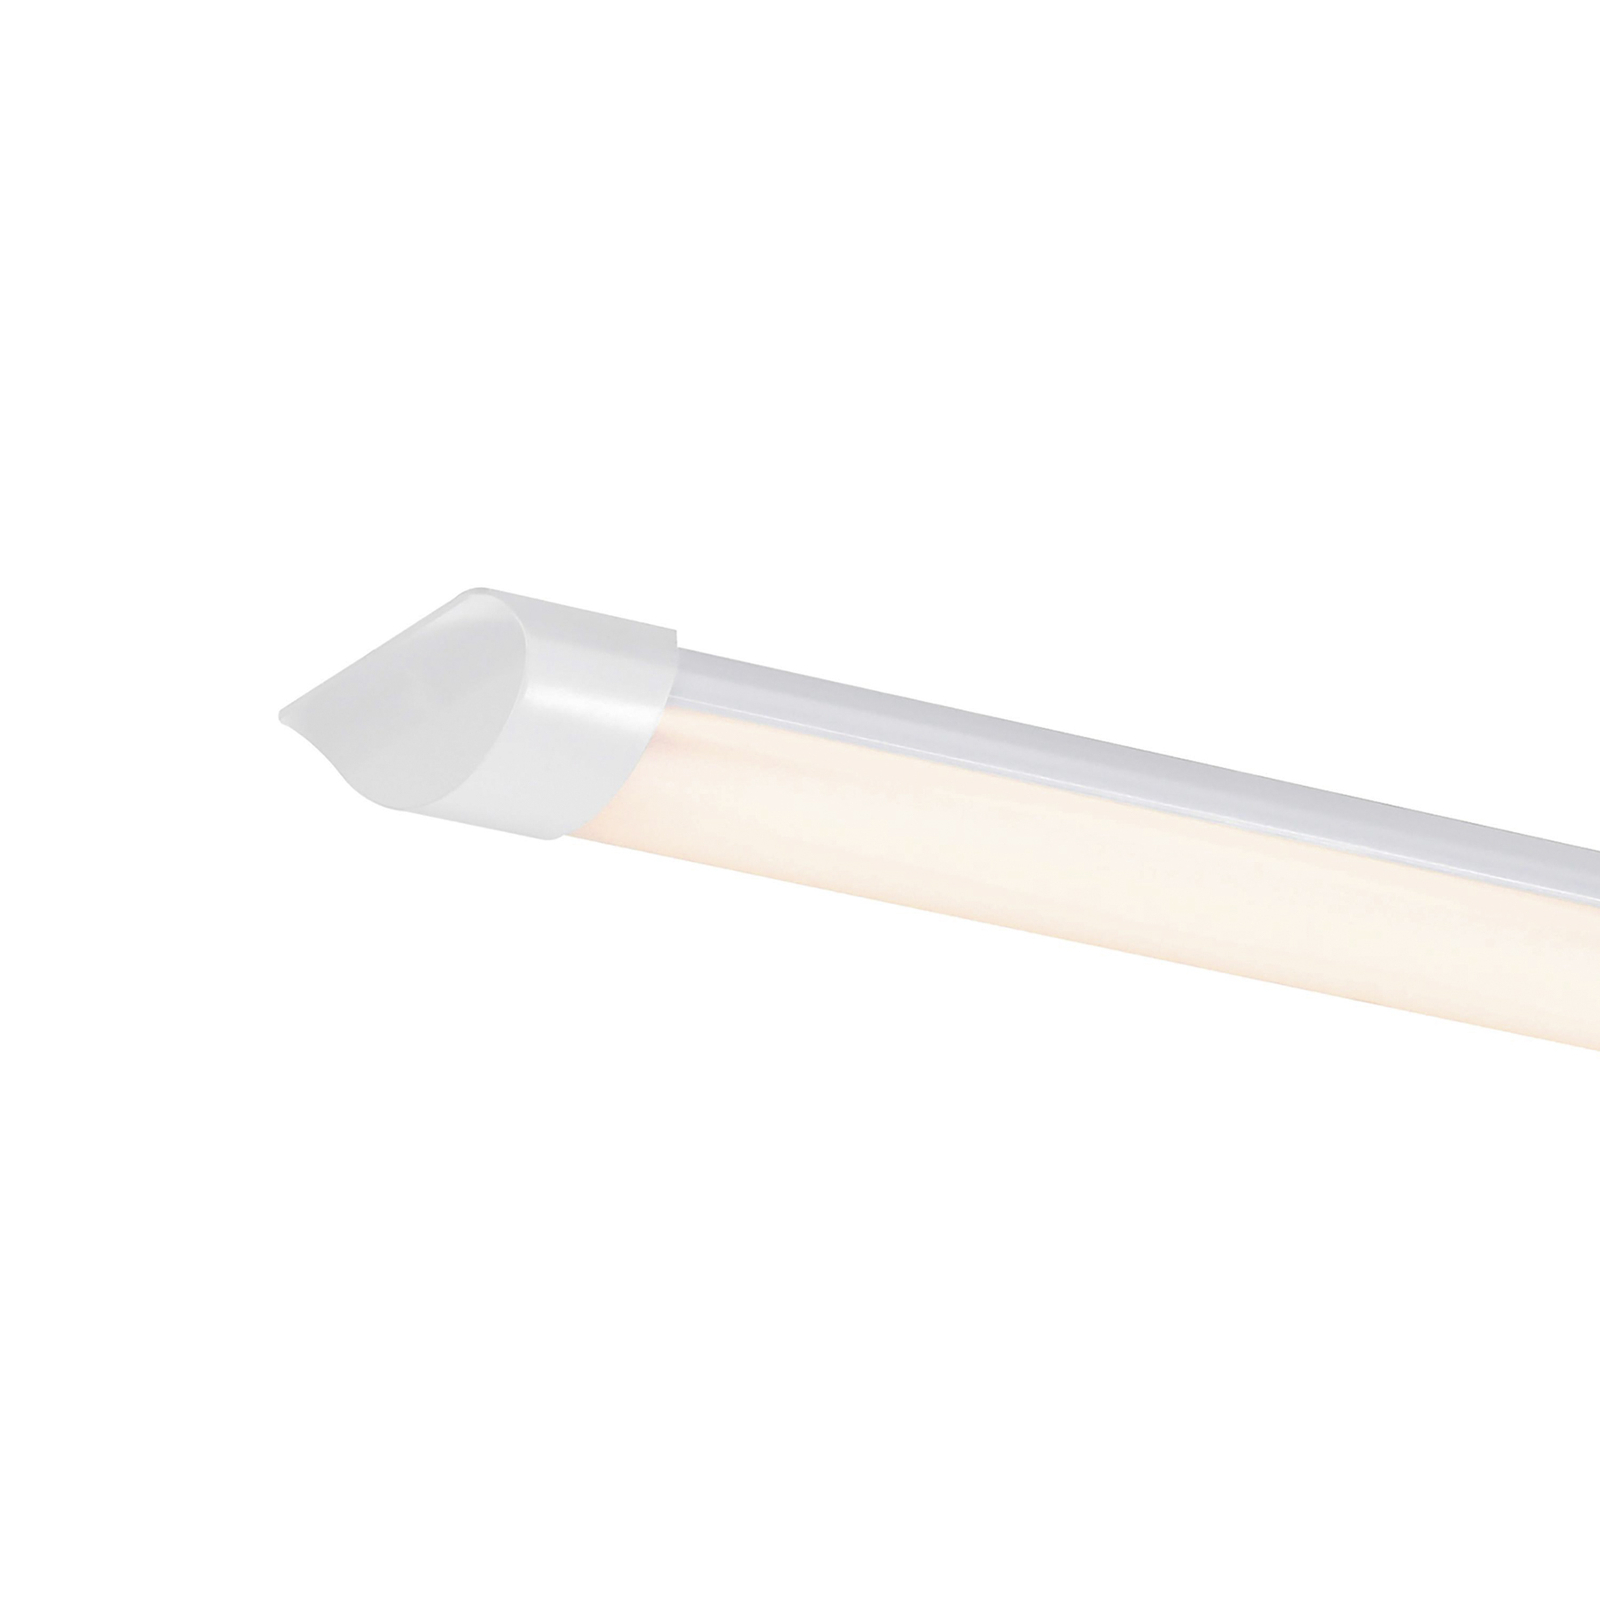 Réglette lumineuse LED Glendale, 59 cm, IP20, plastique, blanc